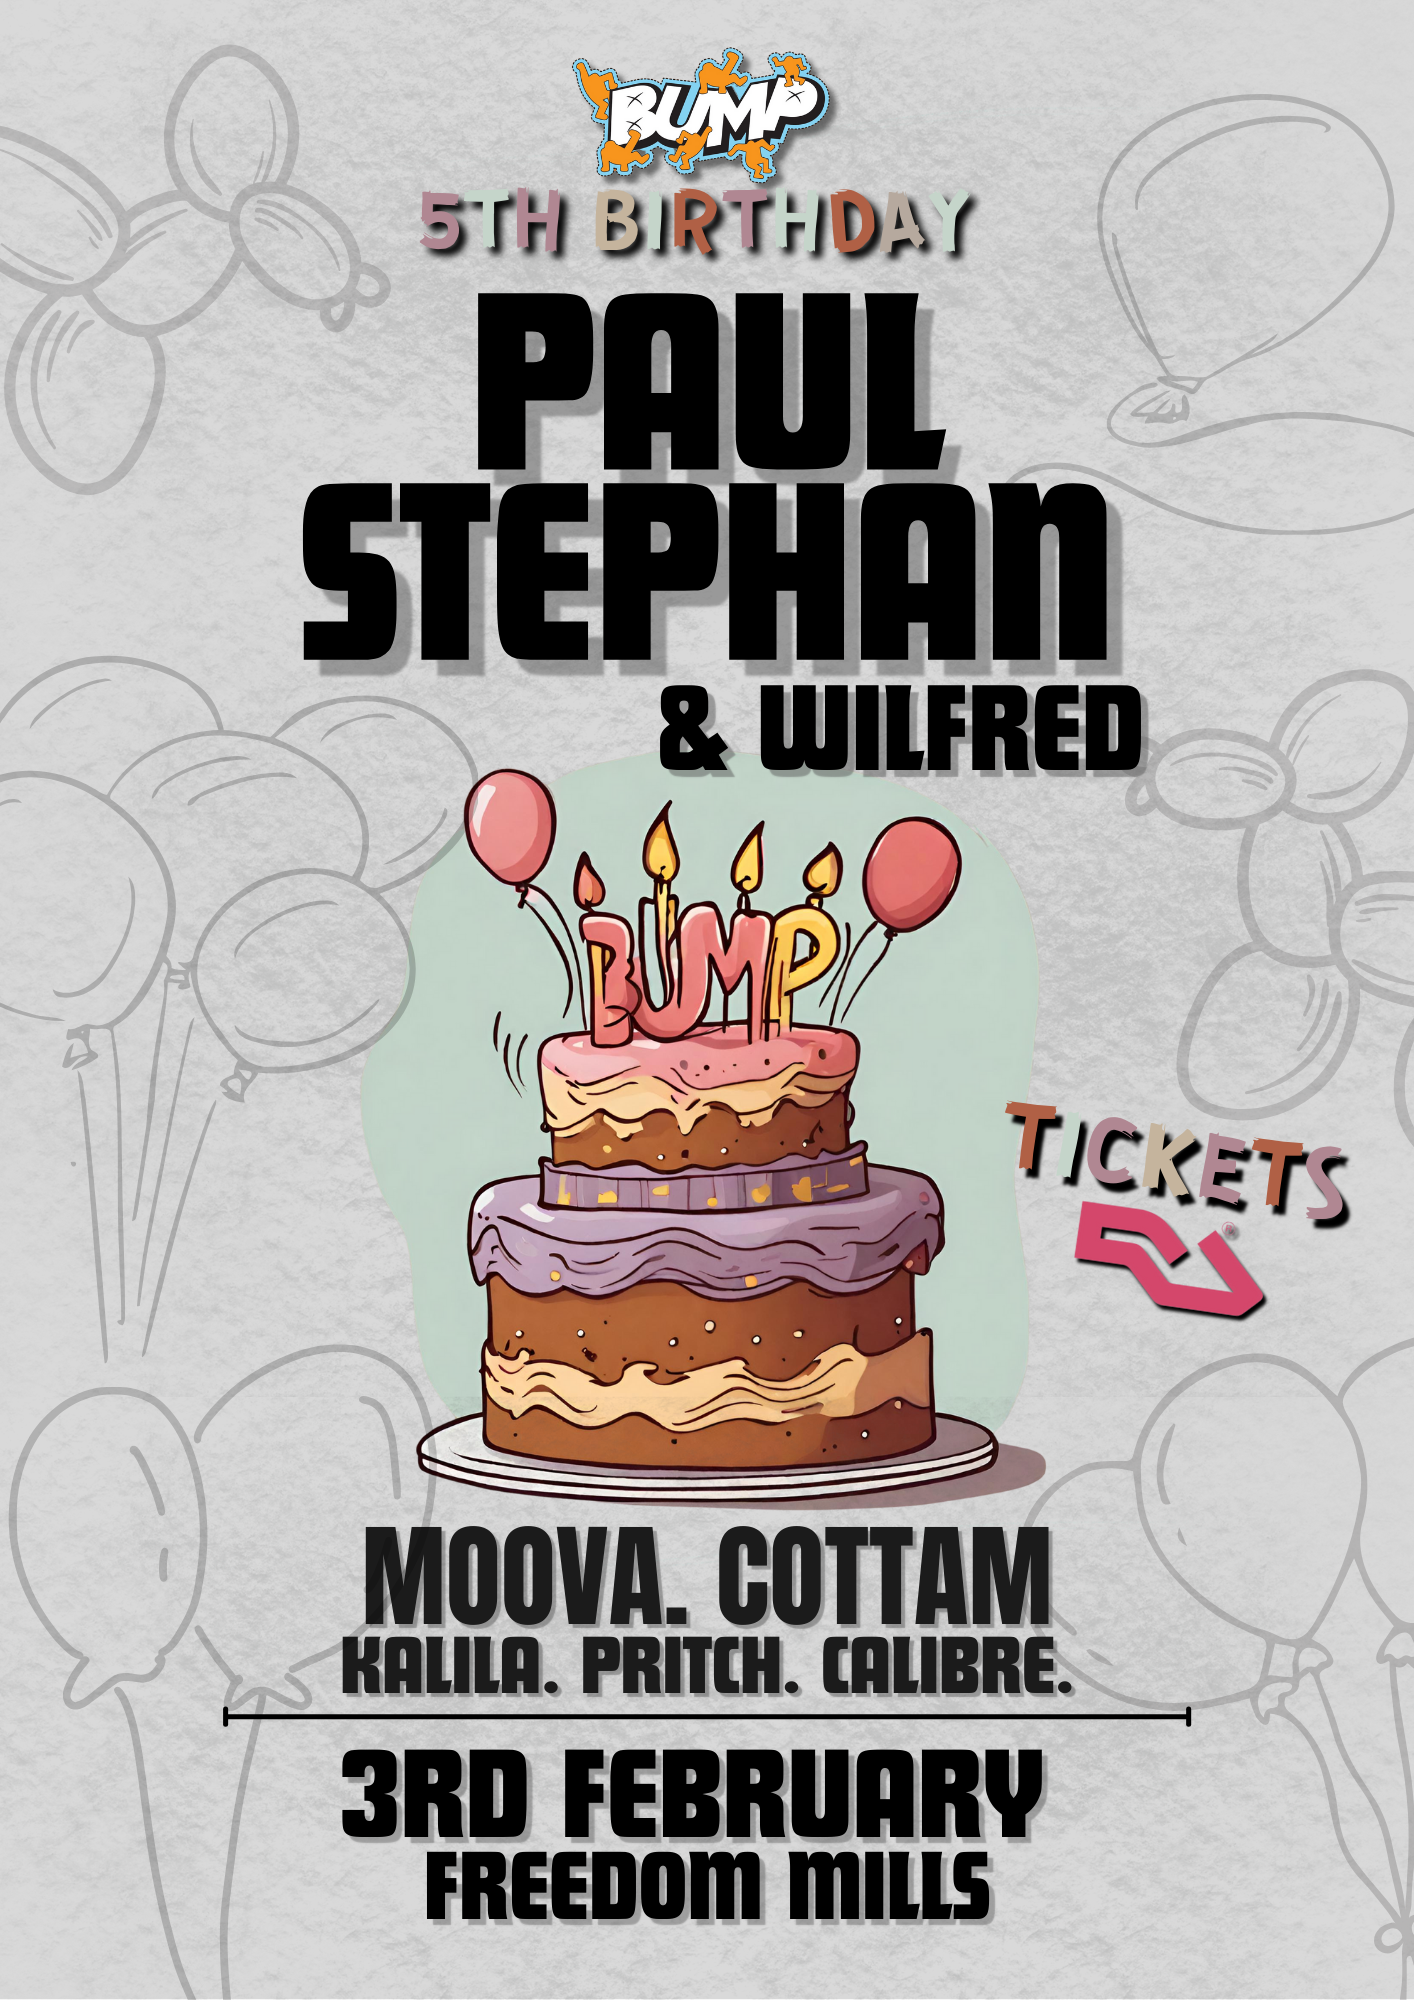 Bump Leeds 5th Birthday w/ Paul Stephan & Wilfred + Moova / Cottam & Friends - Página trasera